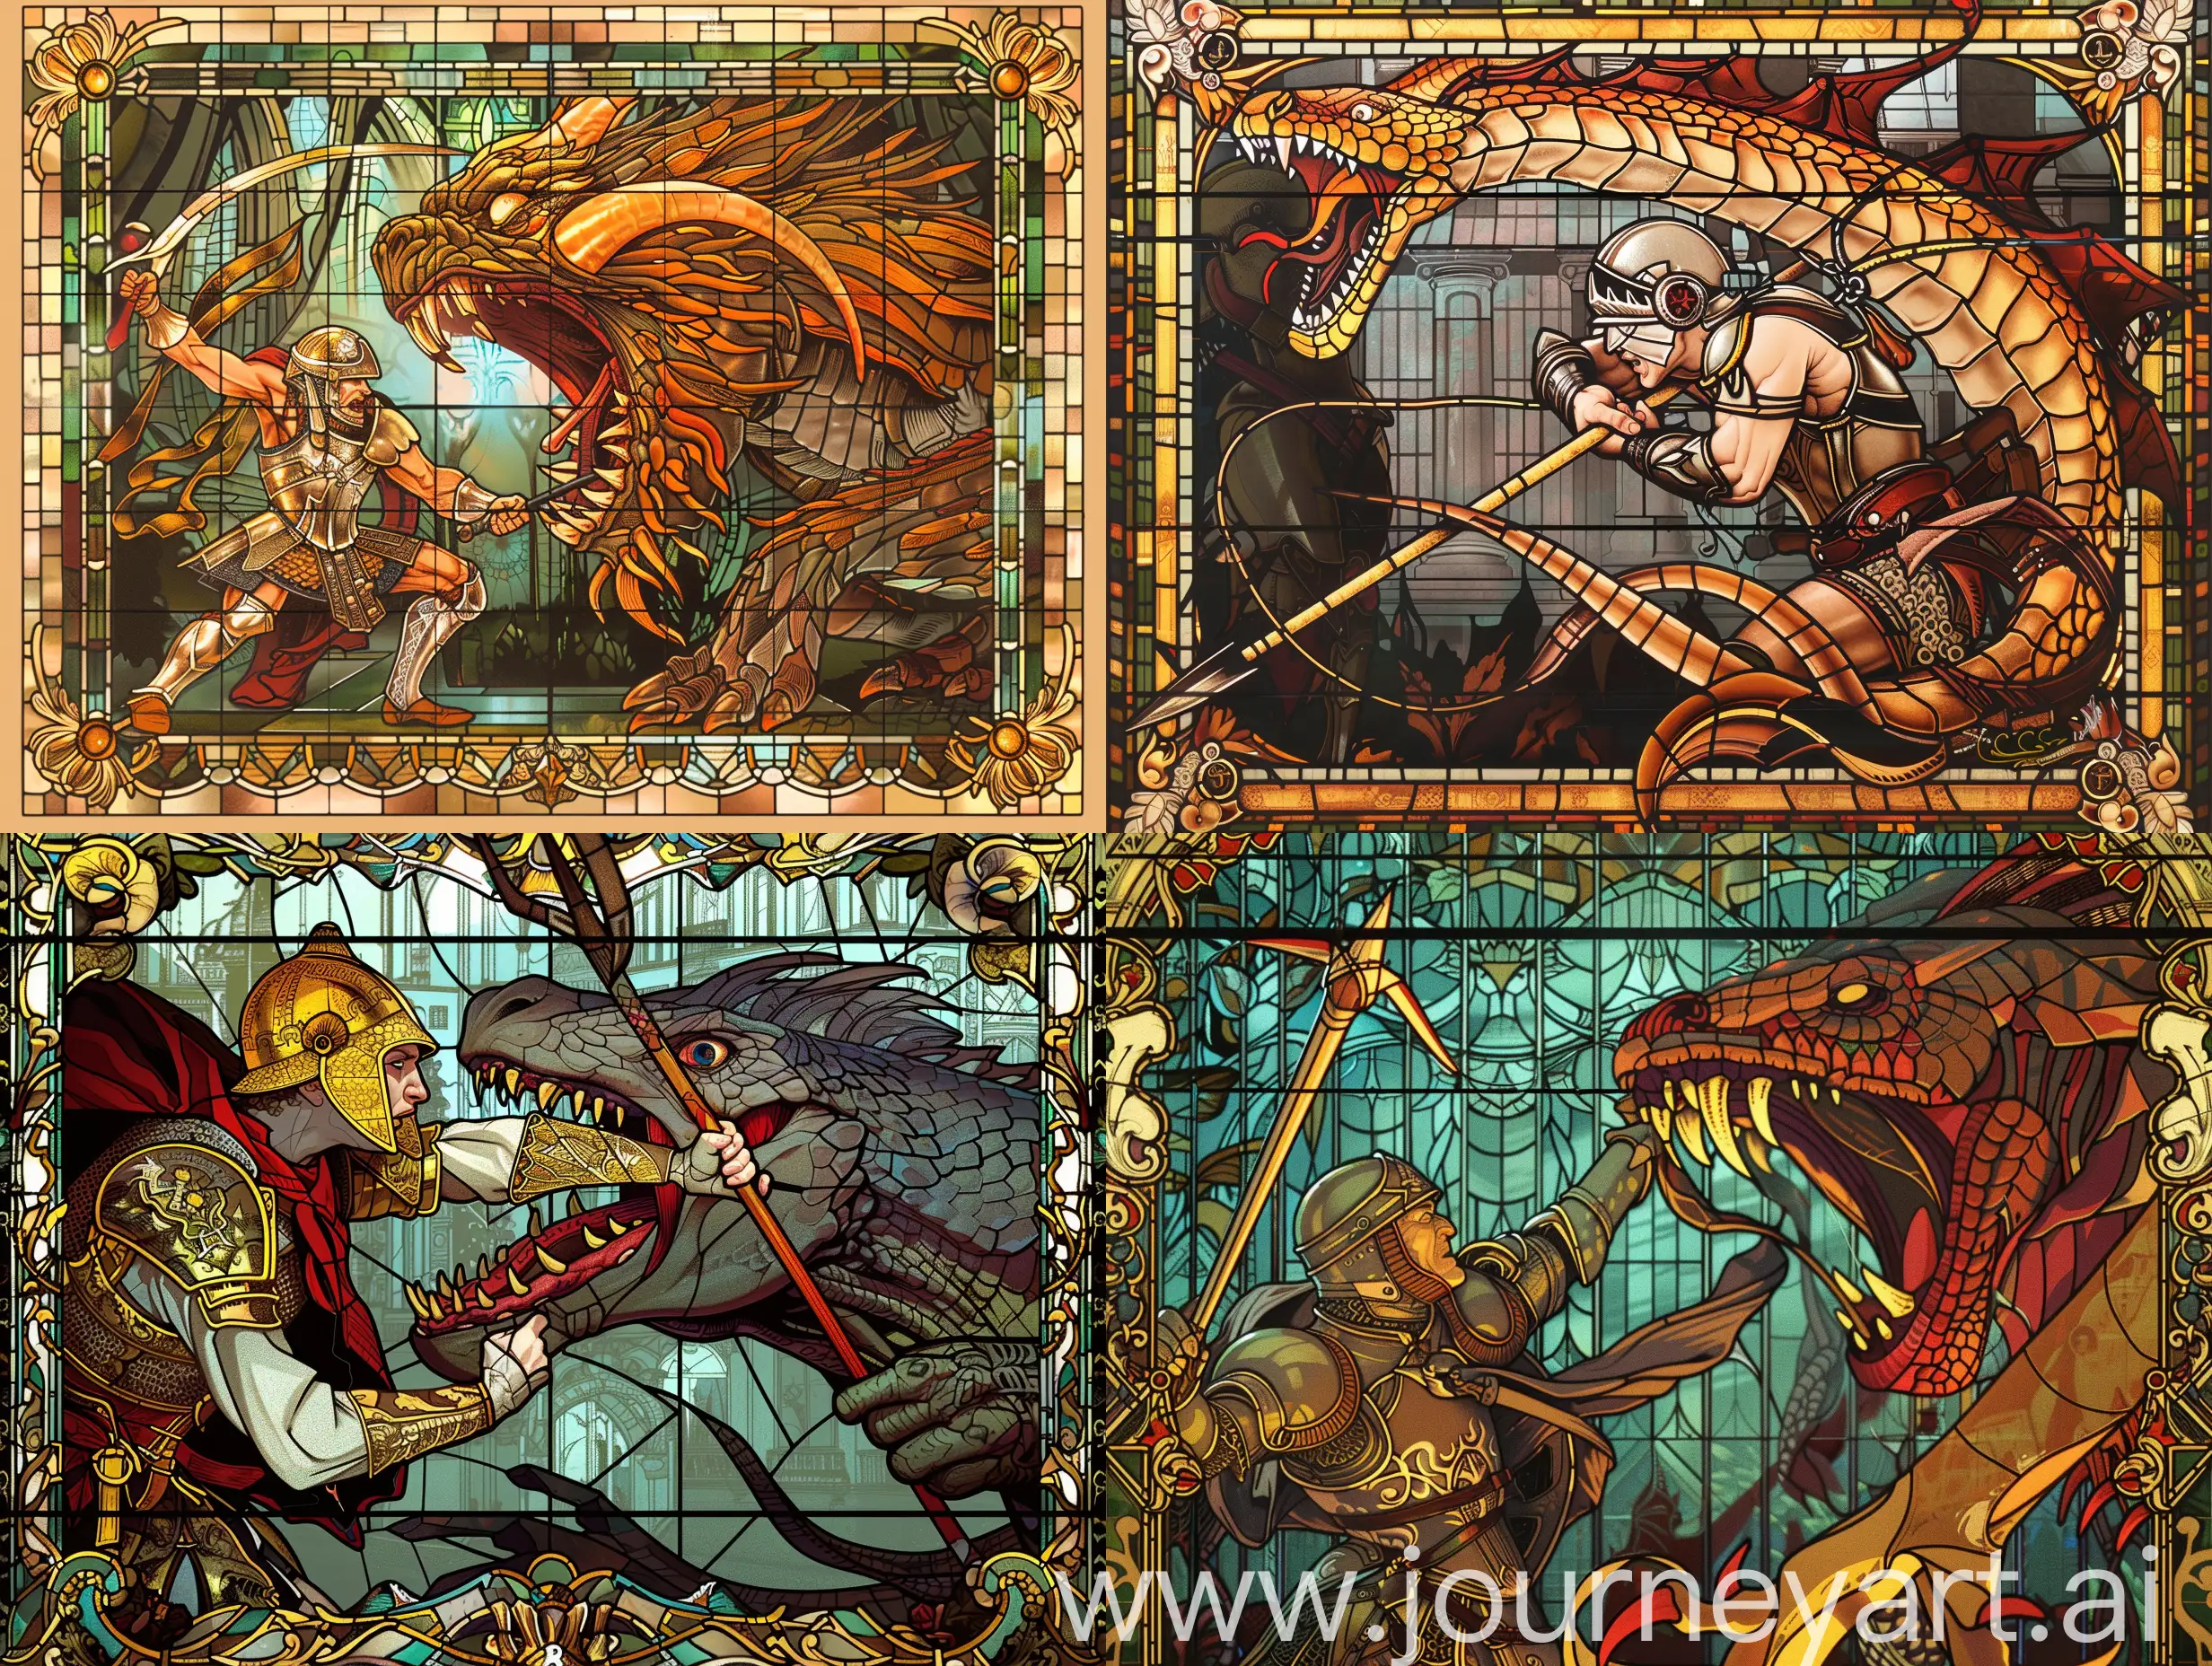 Epic-Battle-in-Stained-Glass-Art-Nouveau-Warrior-Confronts-Monstrous-Serpent